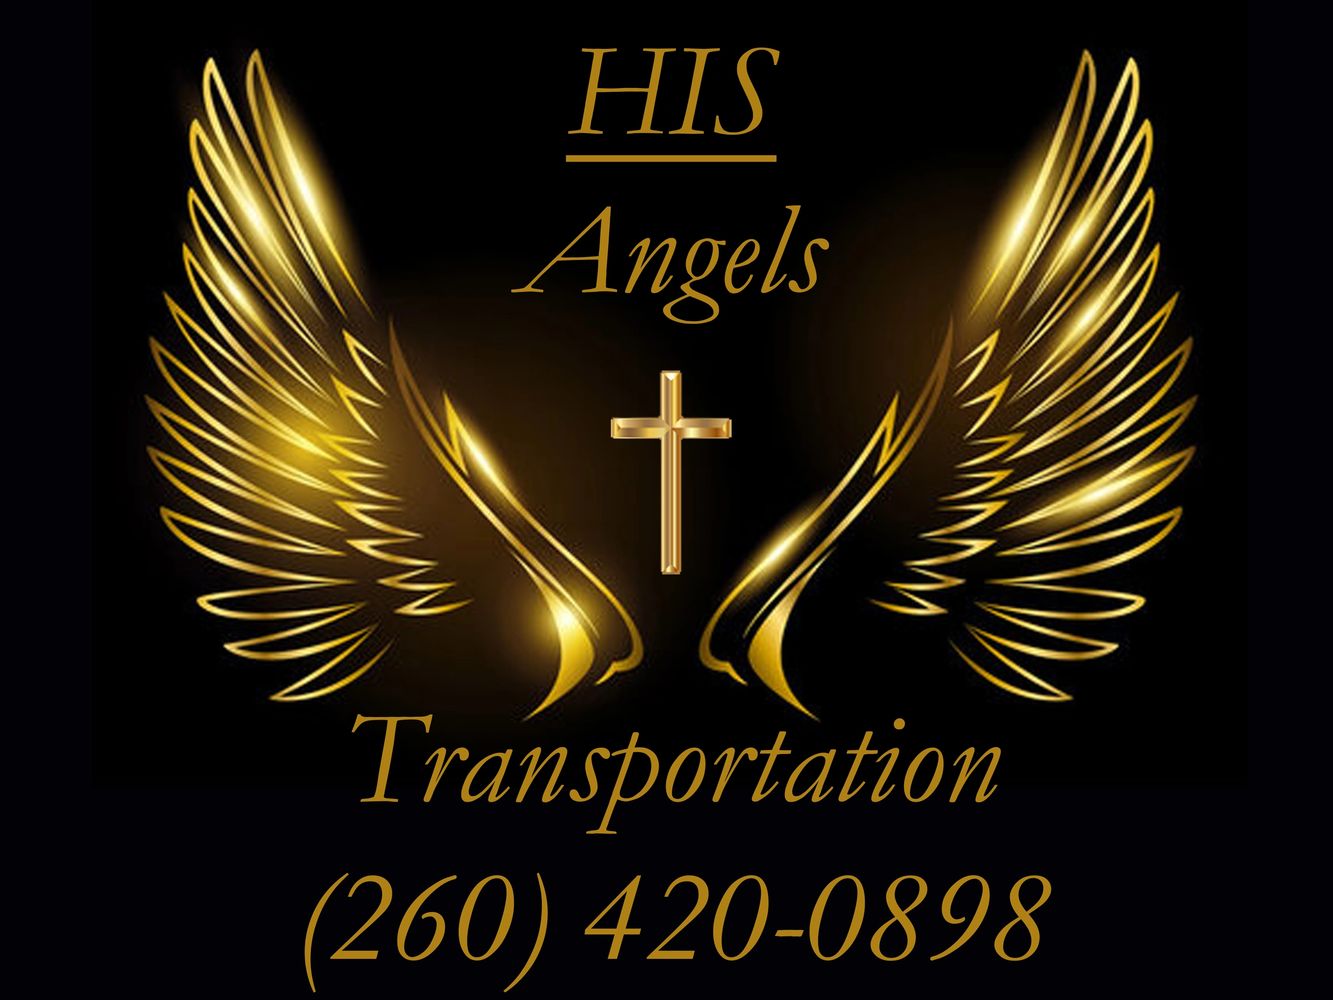 HIS Angels Transportation Sign